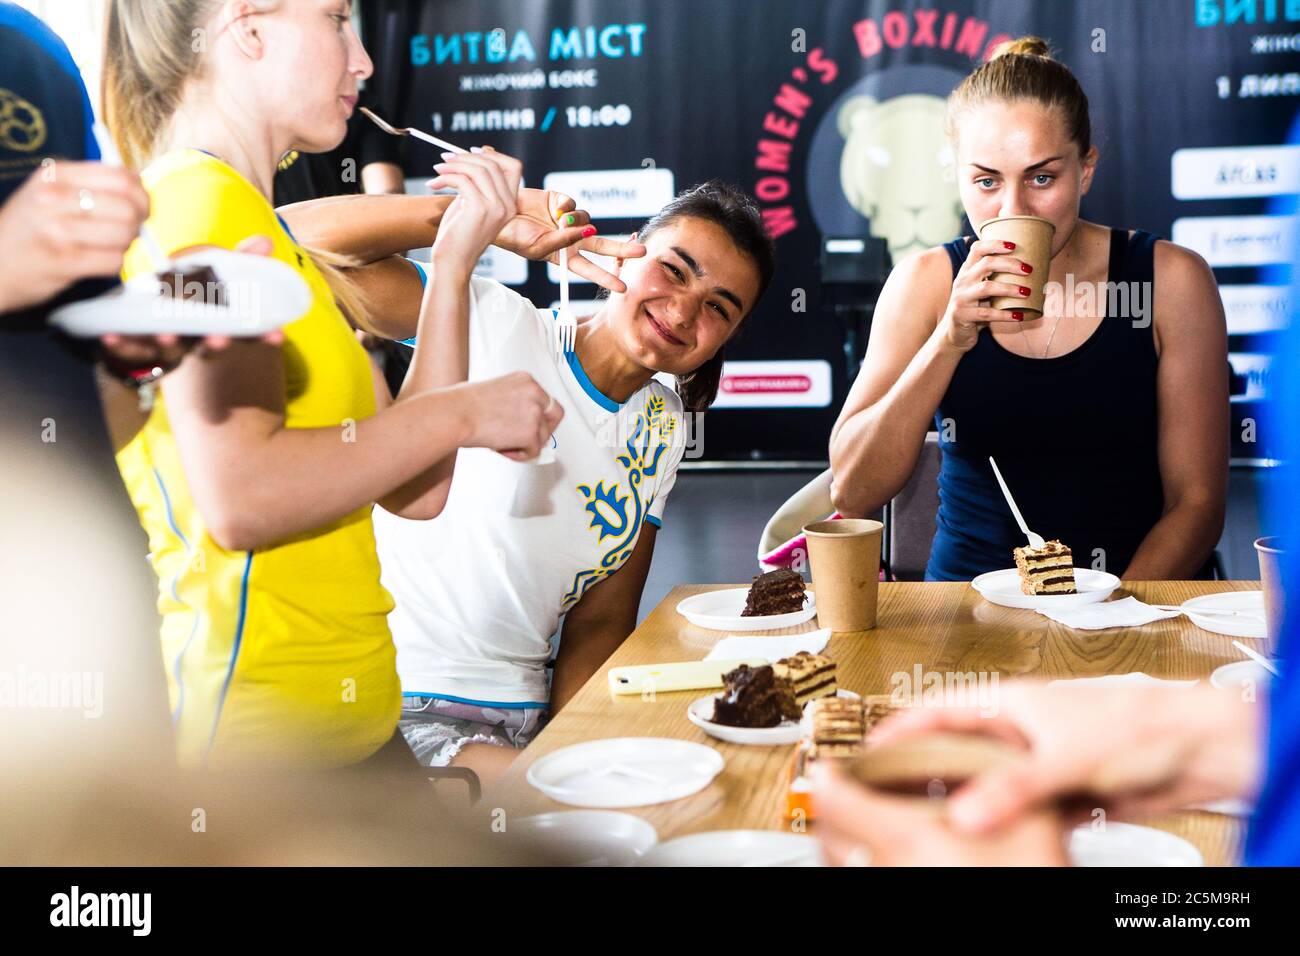 Ukrainian girls boxers Lera Eroshenko (white T-shirt) and friends in Ukrainian Female boxing League enjoy sweet cake w/drink after weigh in on scales. Stock Photo